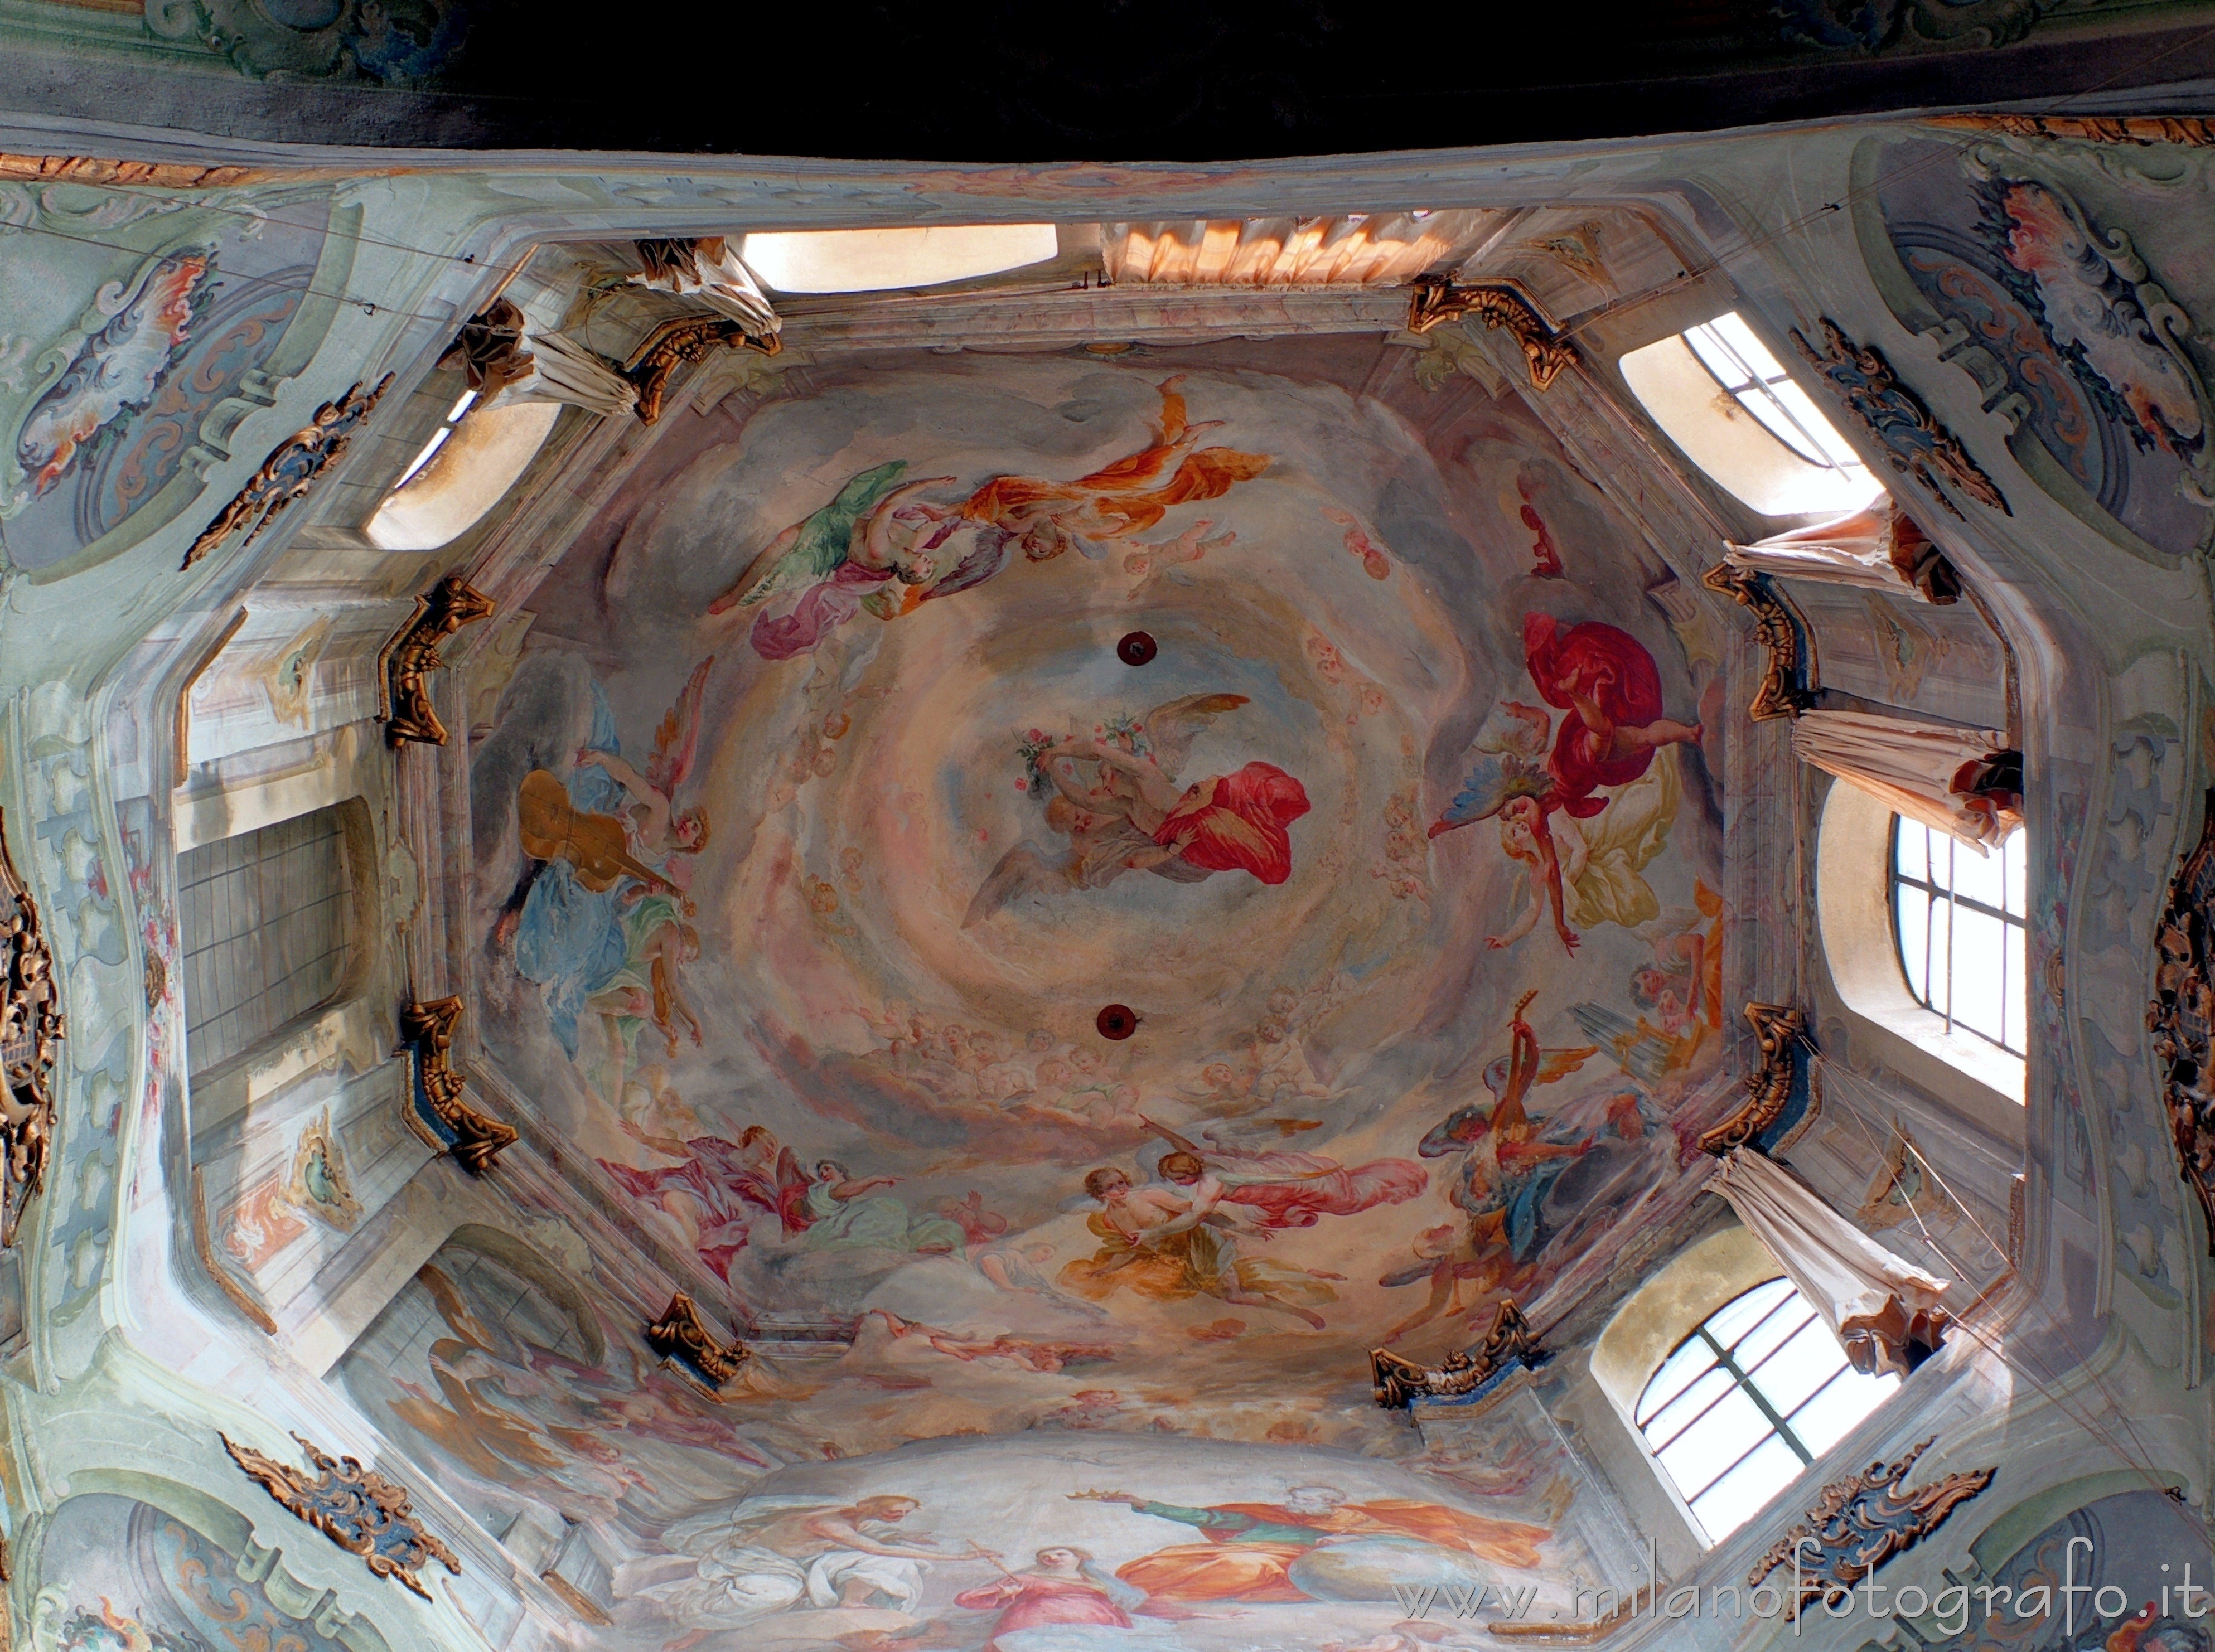 Orta San Giulio (Novara, Italy): Dome of the tiburium of the Church of Santa Maria Assunta - Orta San Giulio (Novara, Italy)